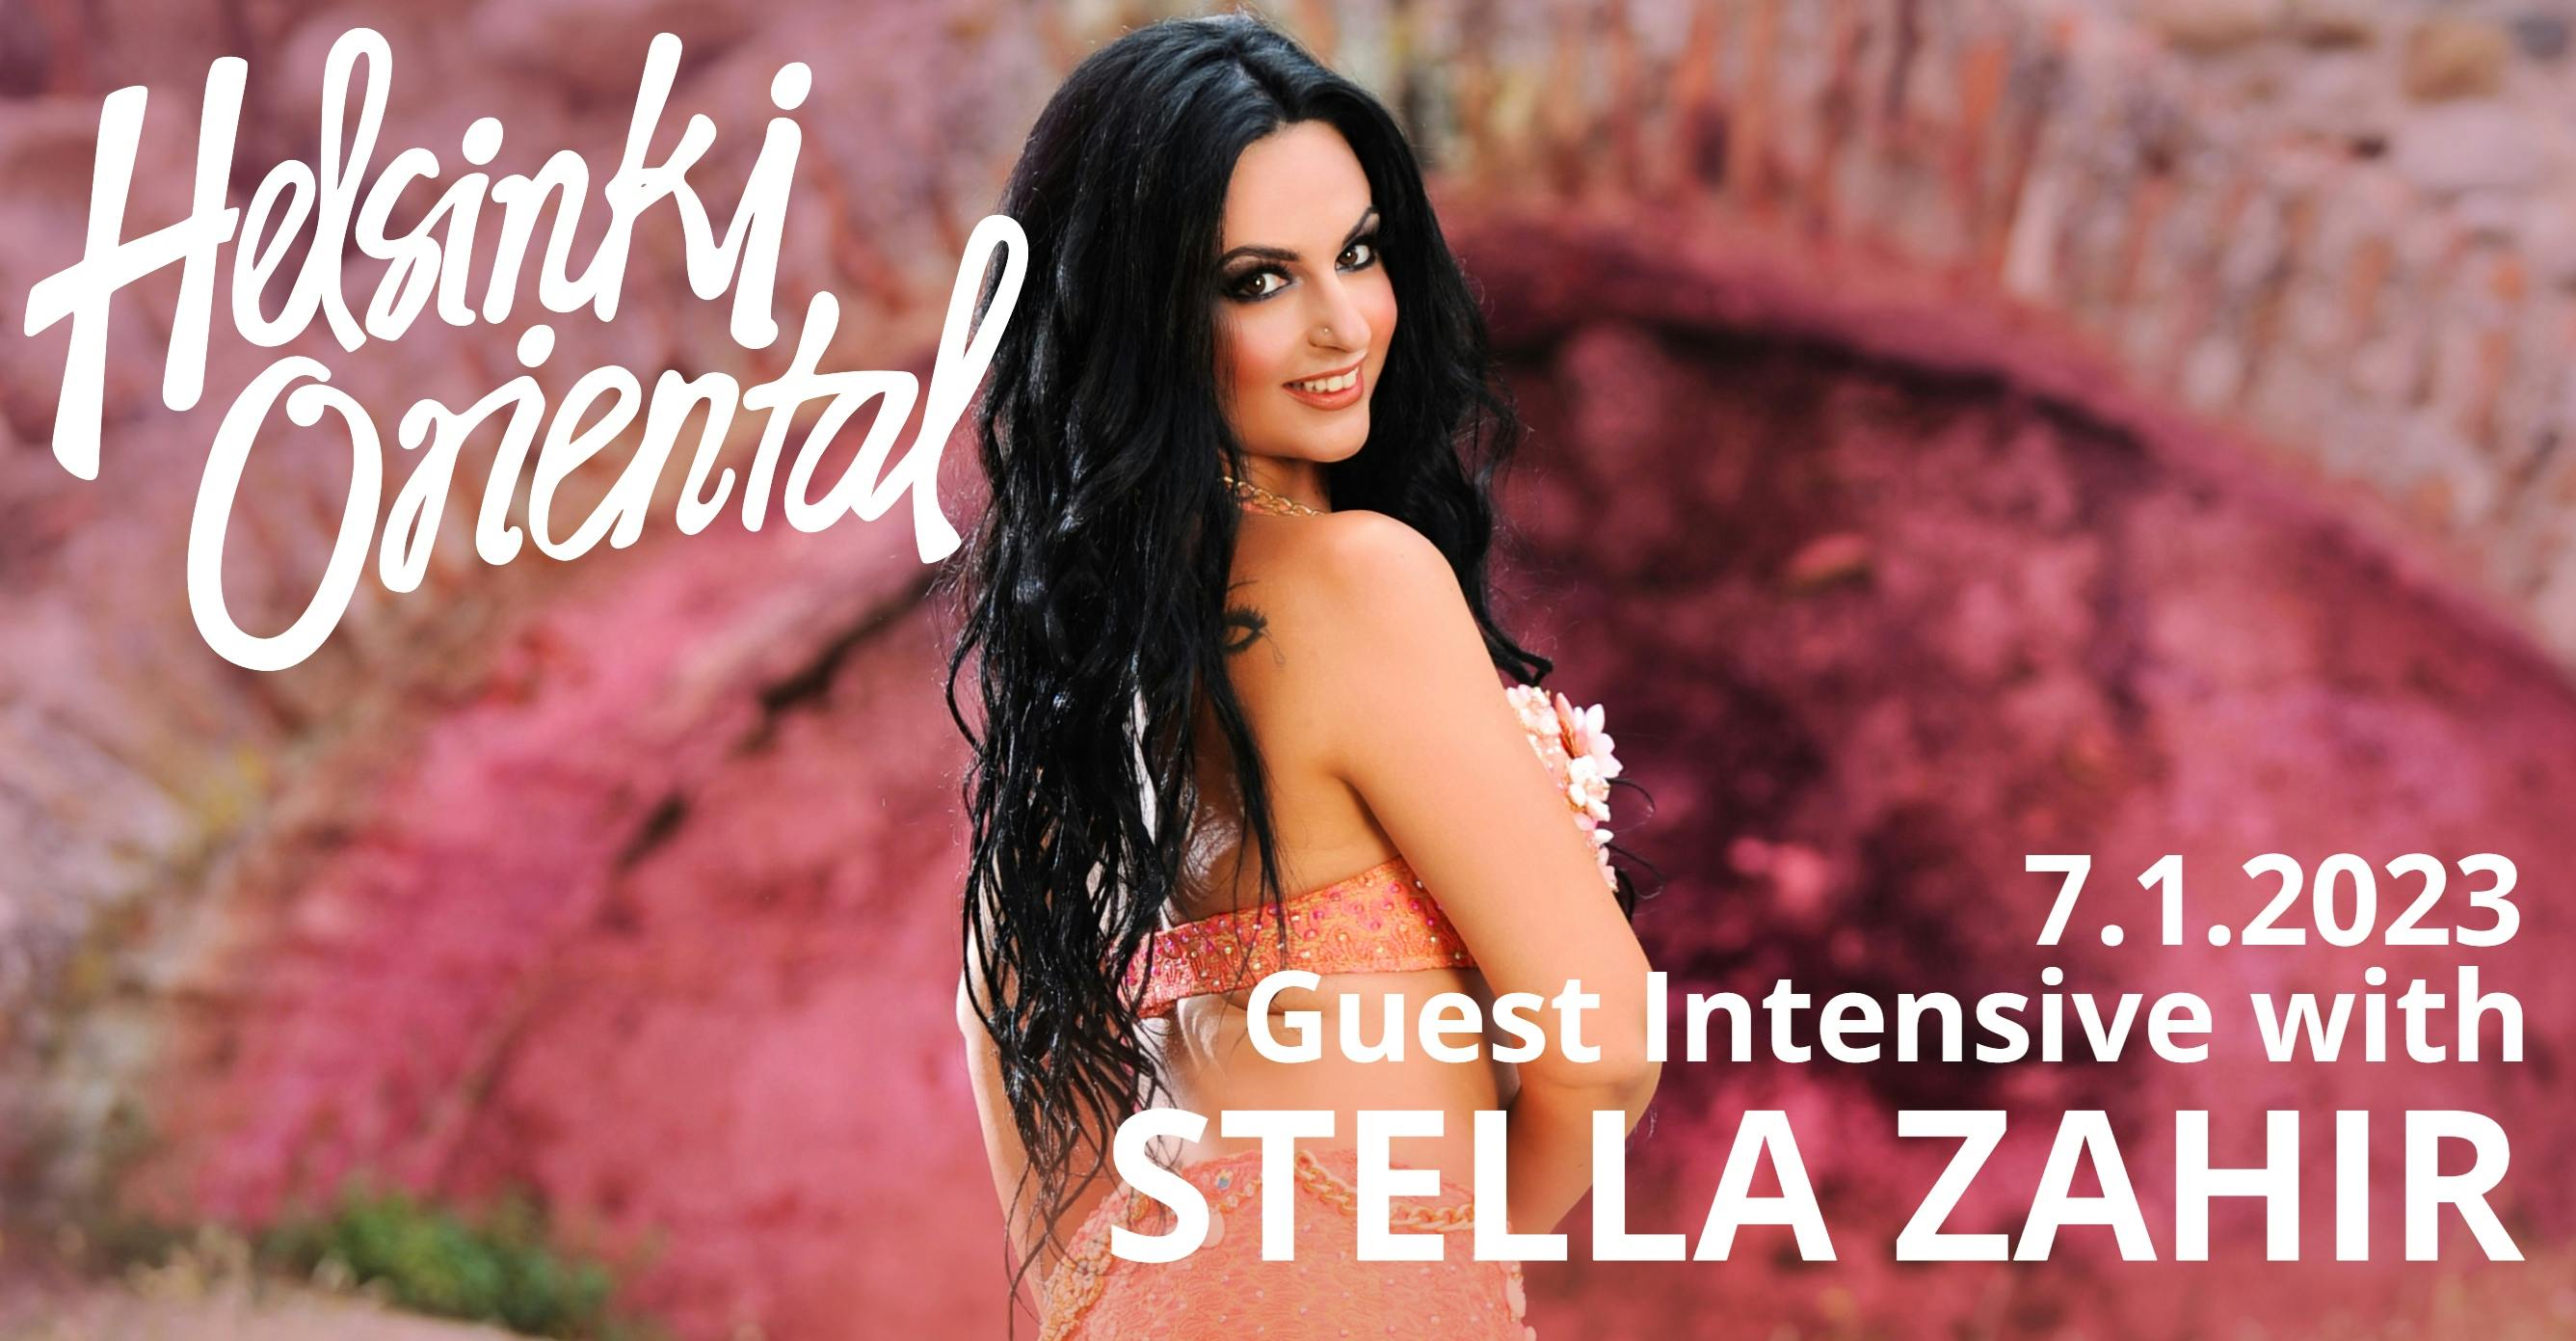 Helsinki Oriental Guest Intensive with Stella Zahir 7.1.2023